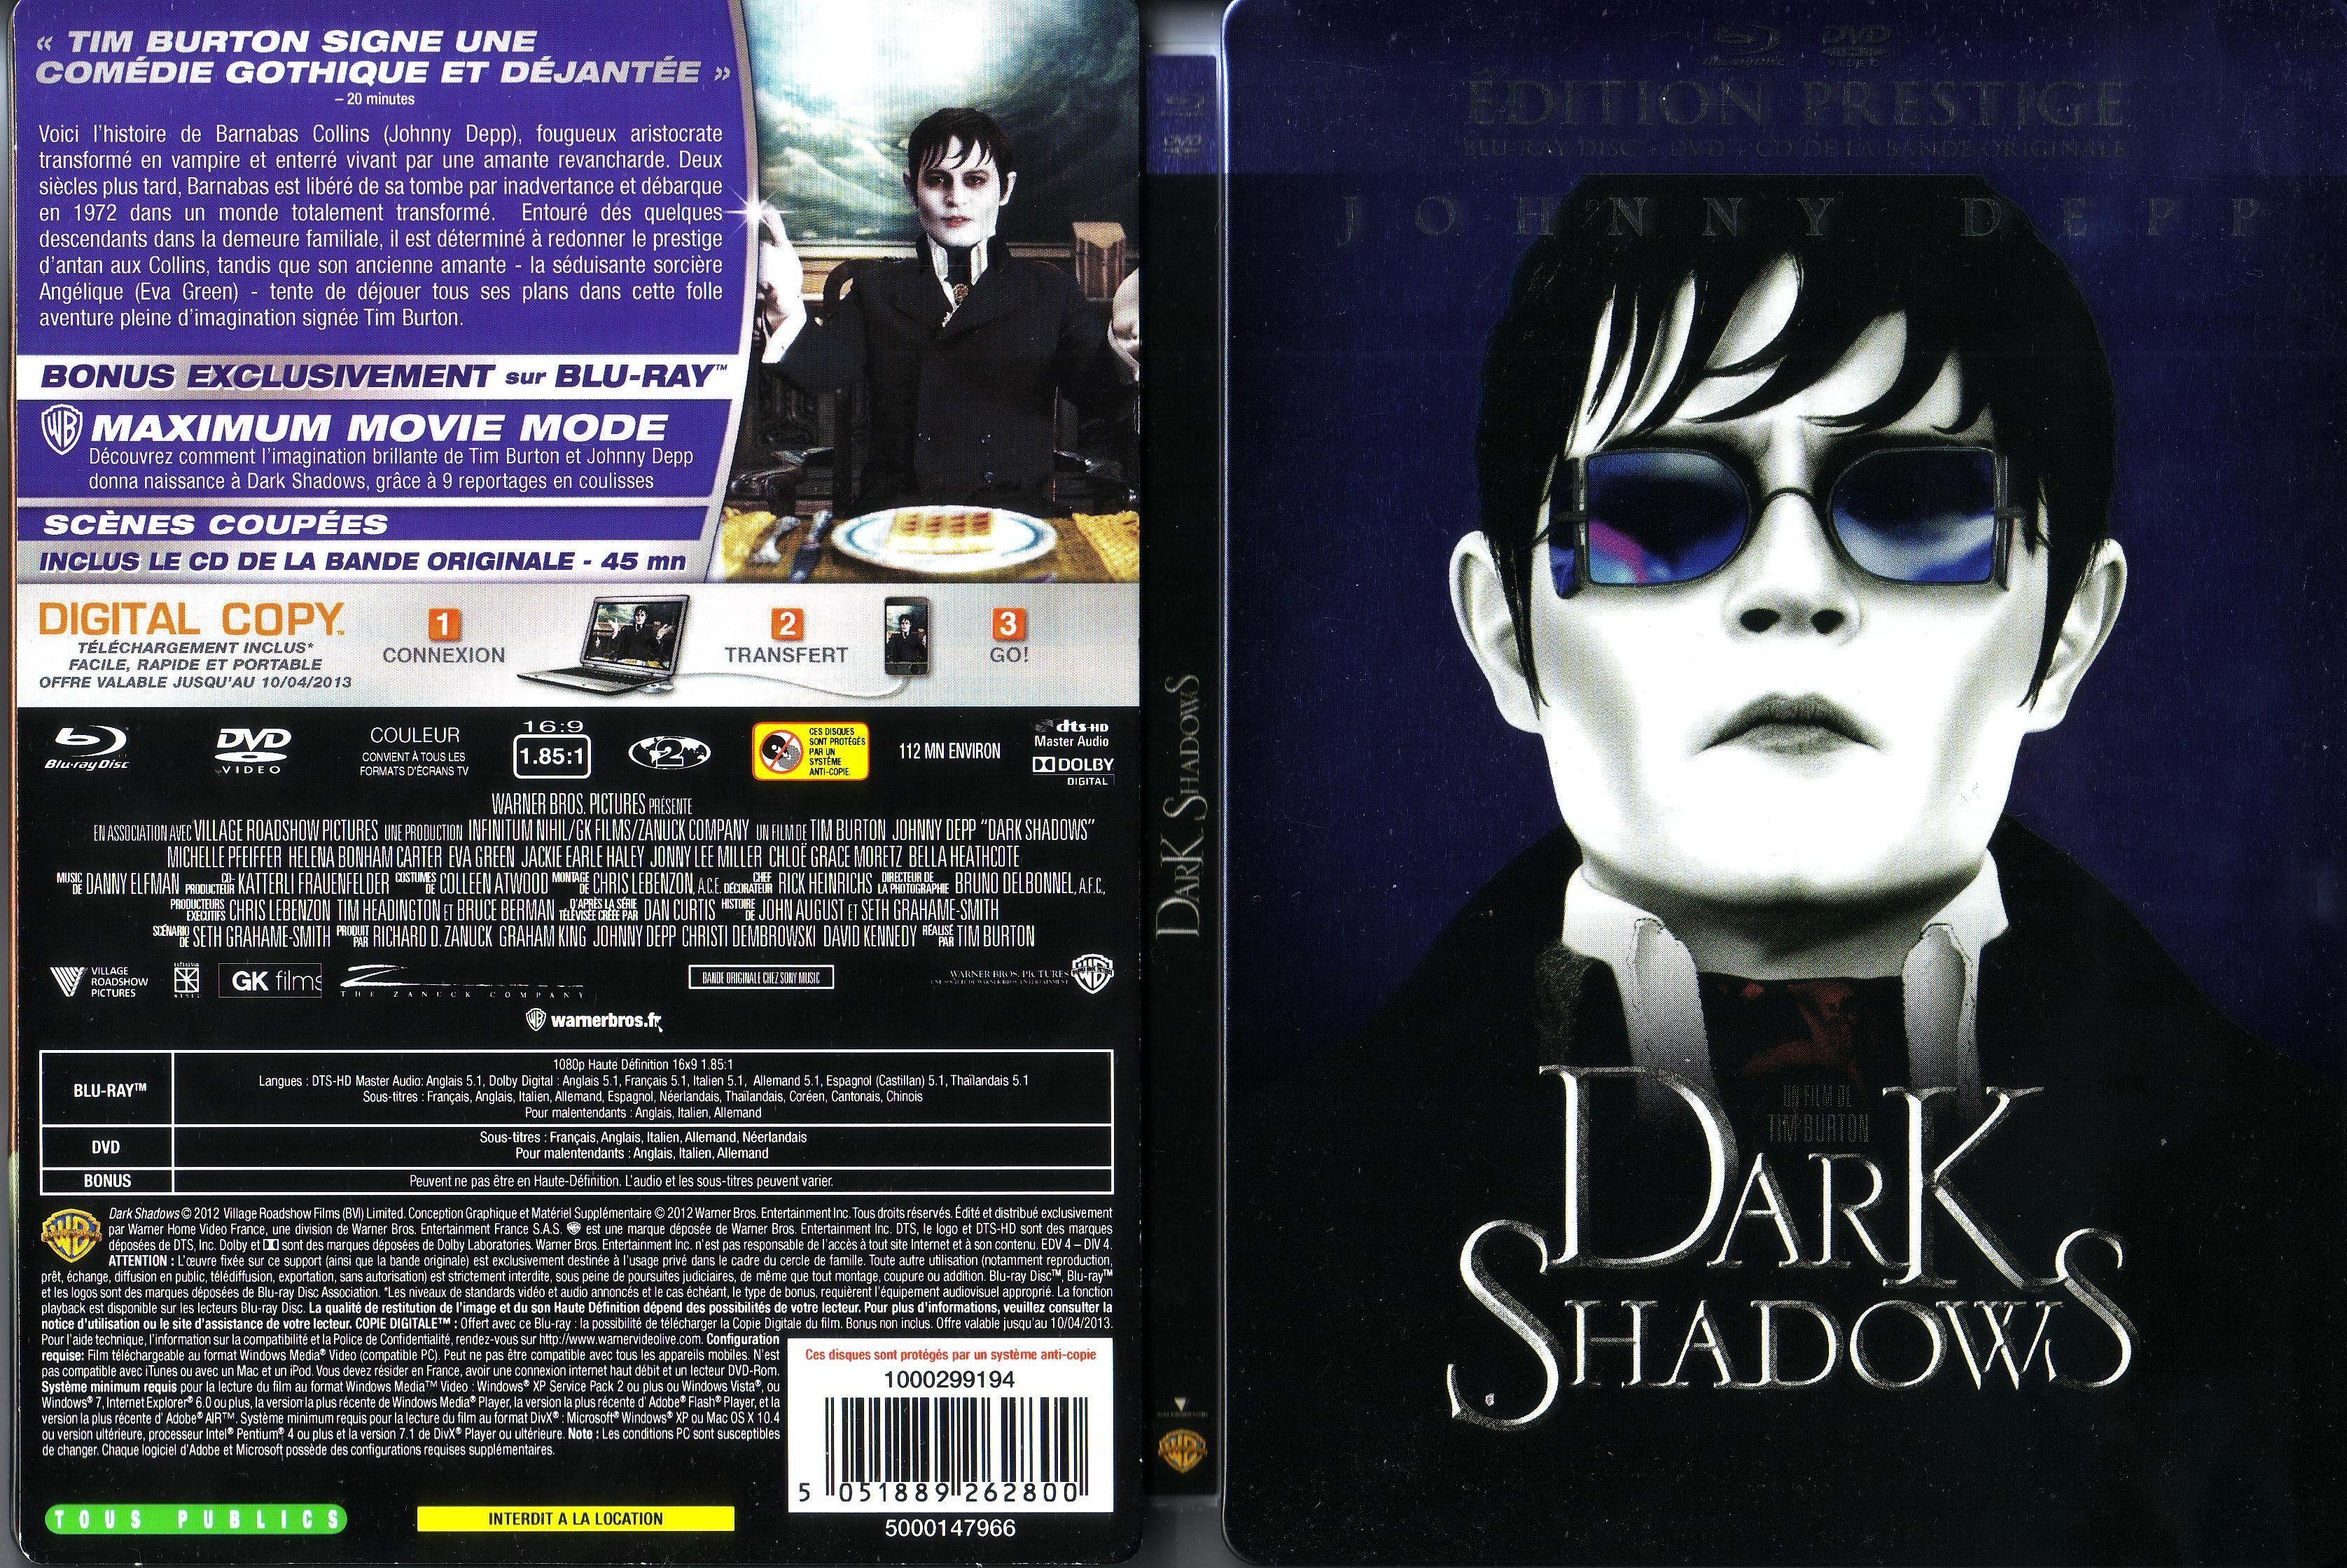 Jaquette DVD Dark shadows (BLU-RAY)